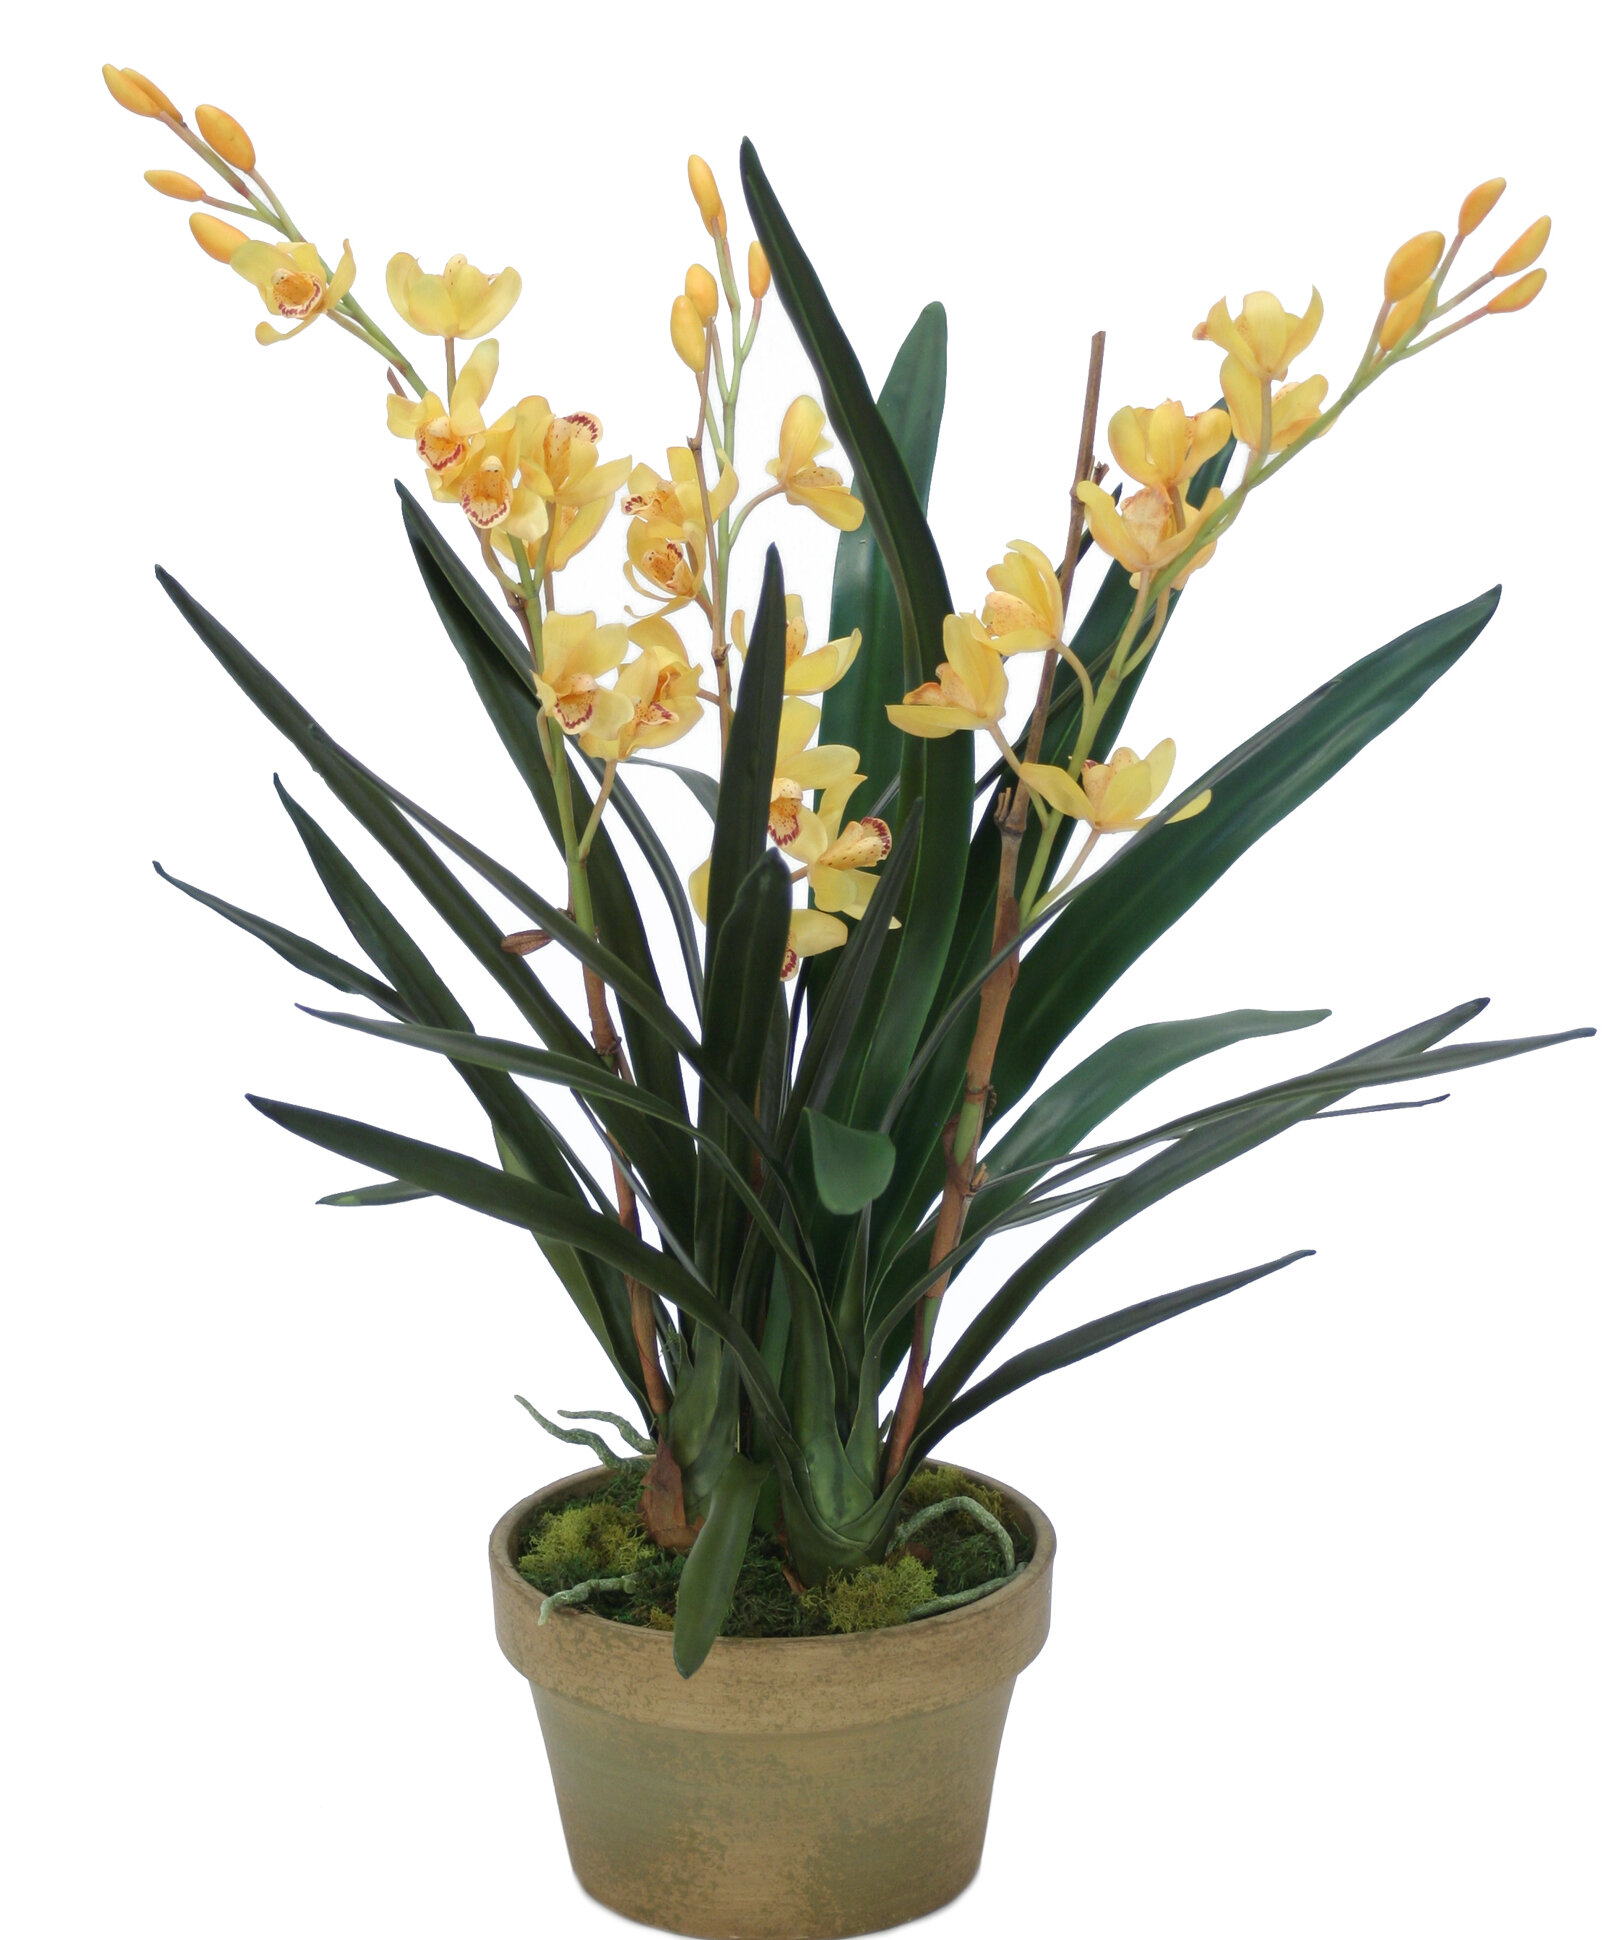 Bay Isle Home Cymbidium Orchid Plant In Pot Wayfair,Green Onion Vs Chives